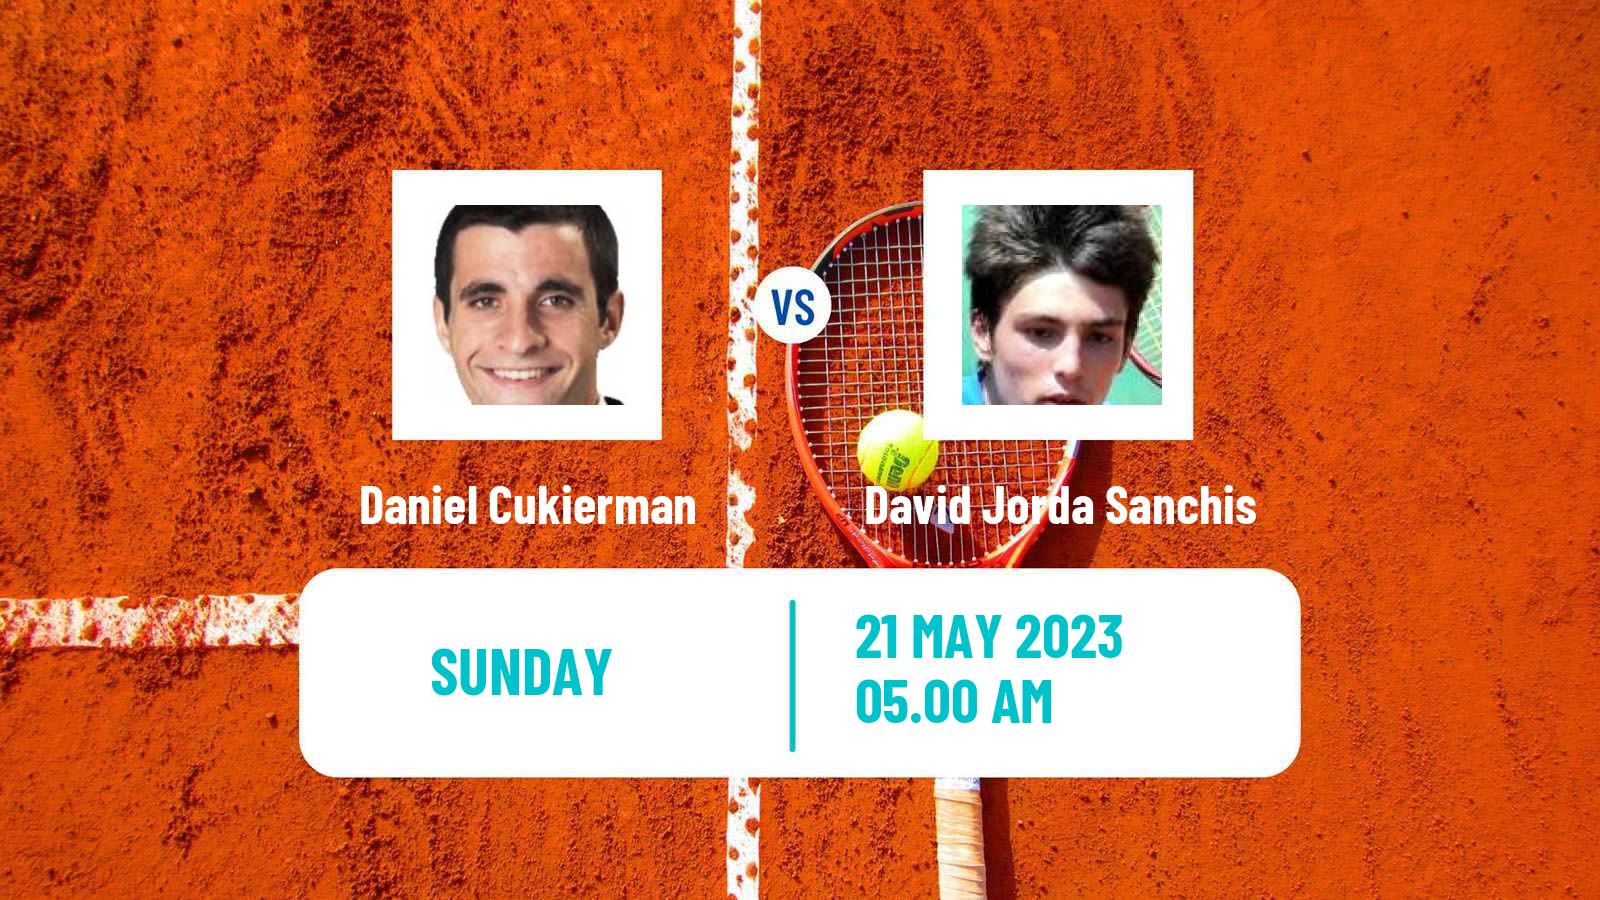 Tennis ITF M25 Gurb Men Daniel Cukierman - David Jorda Sanchis